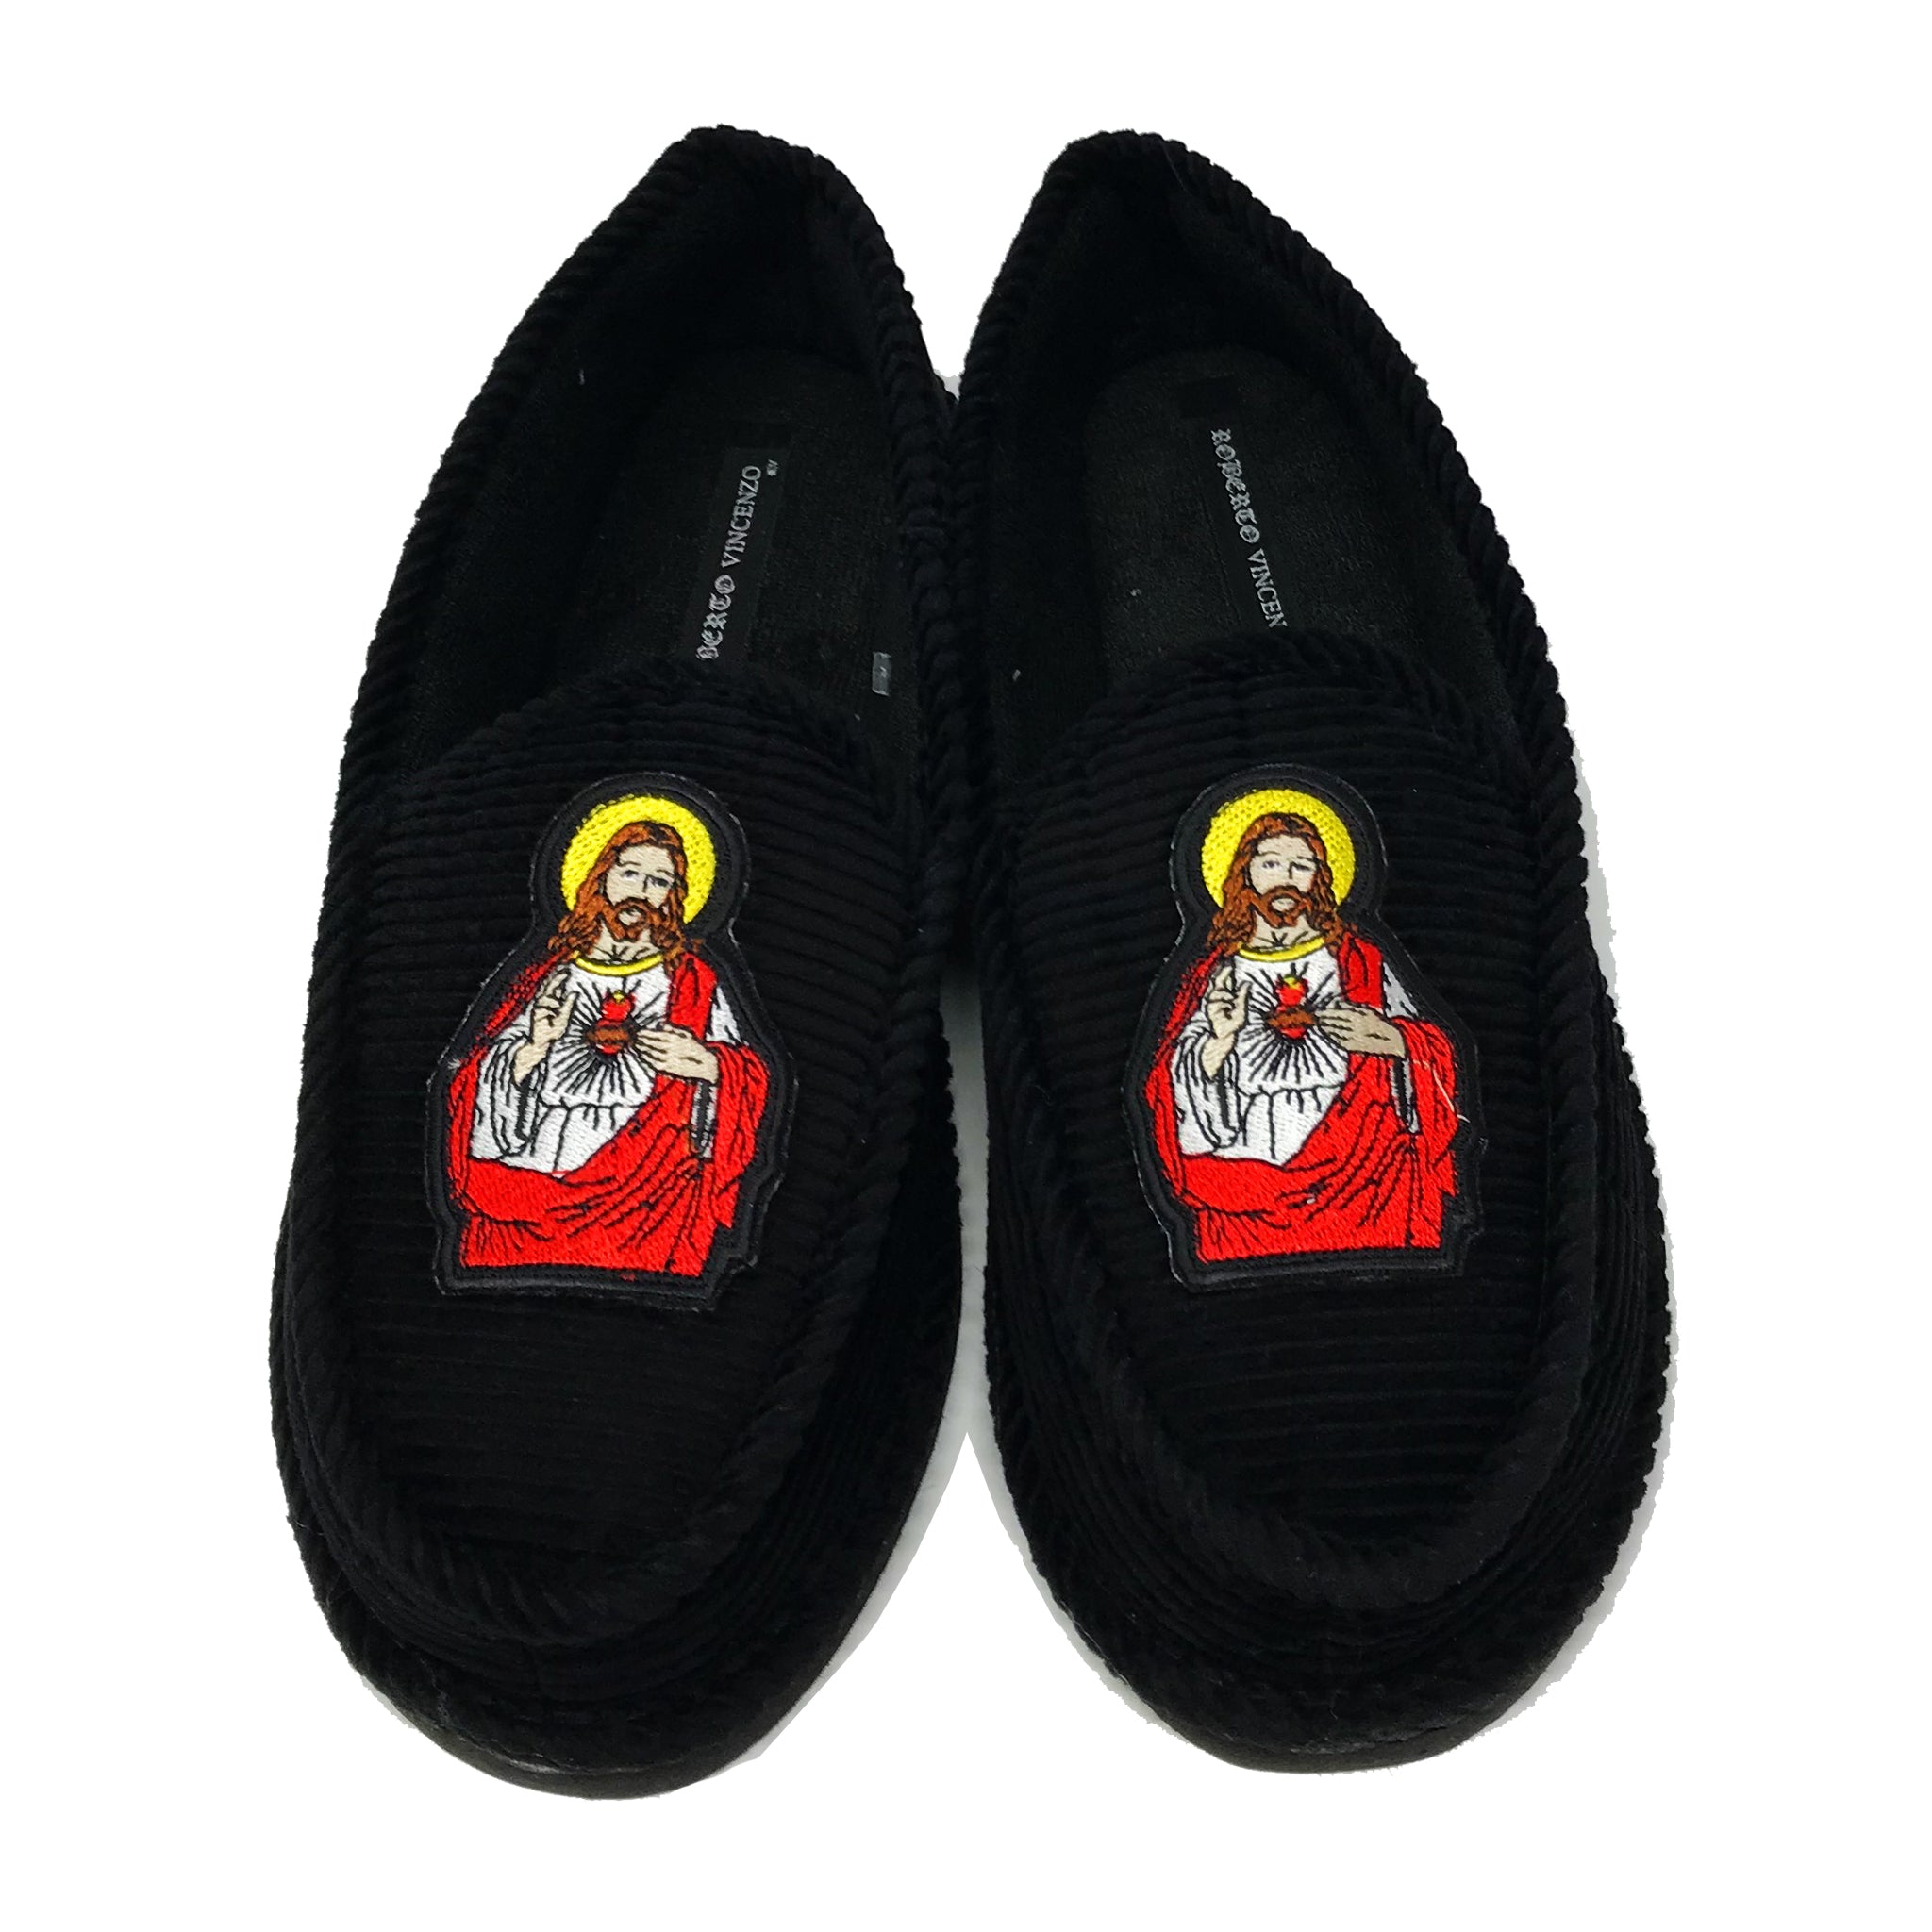 O.G. Jesus Slippers